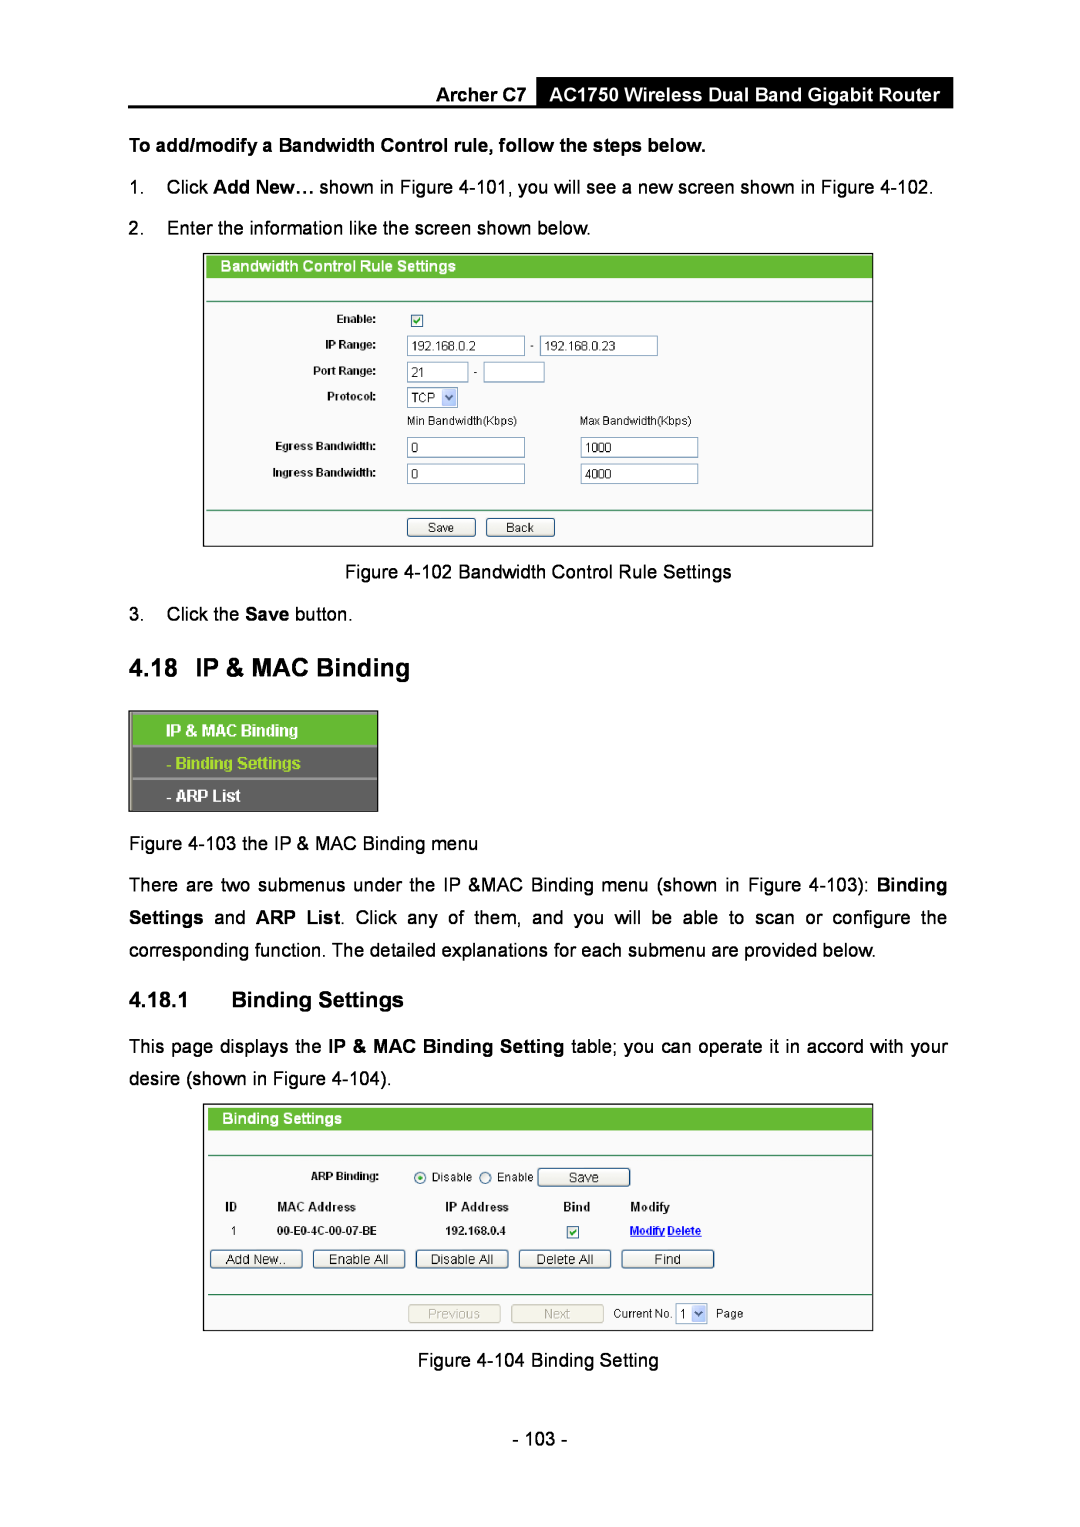 TP-Link AC1750 4.18 IP & MAC Binding, Binding Settings, To add/modify a Bandwidth Control rule, follow the steps below 